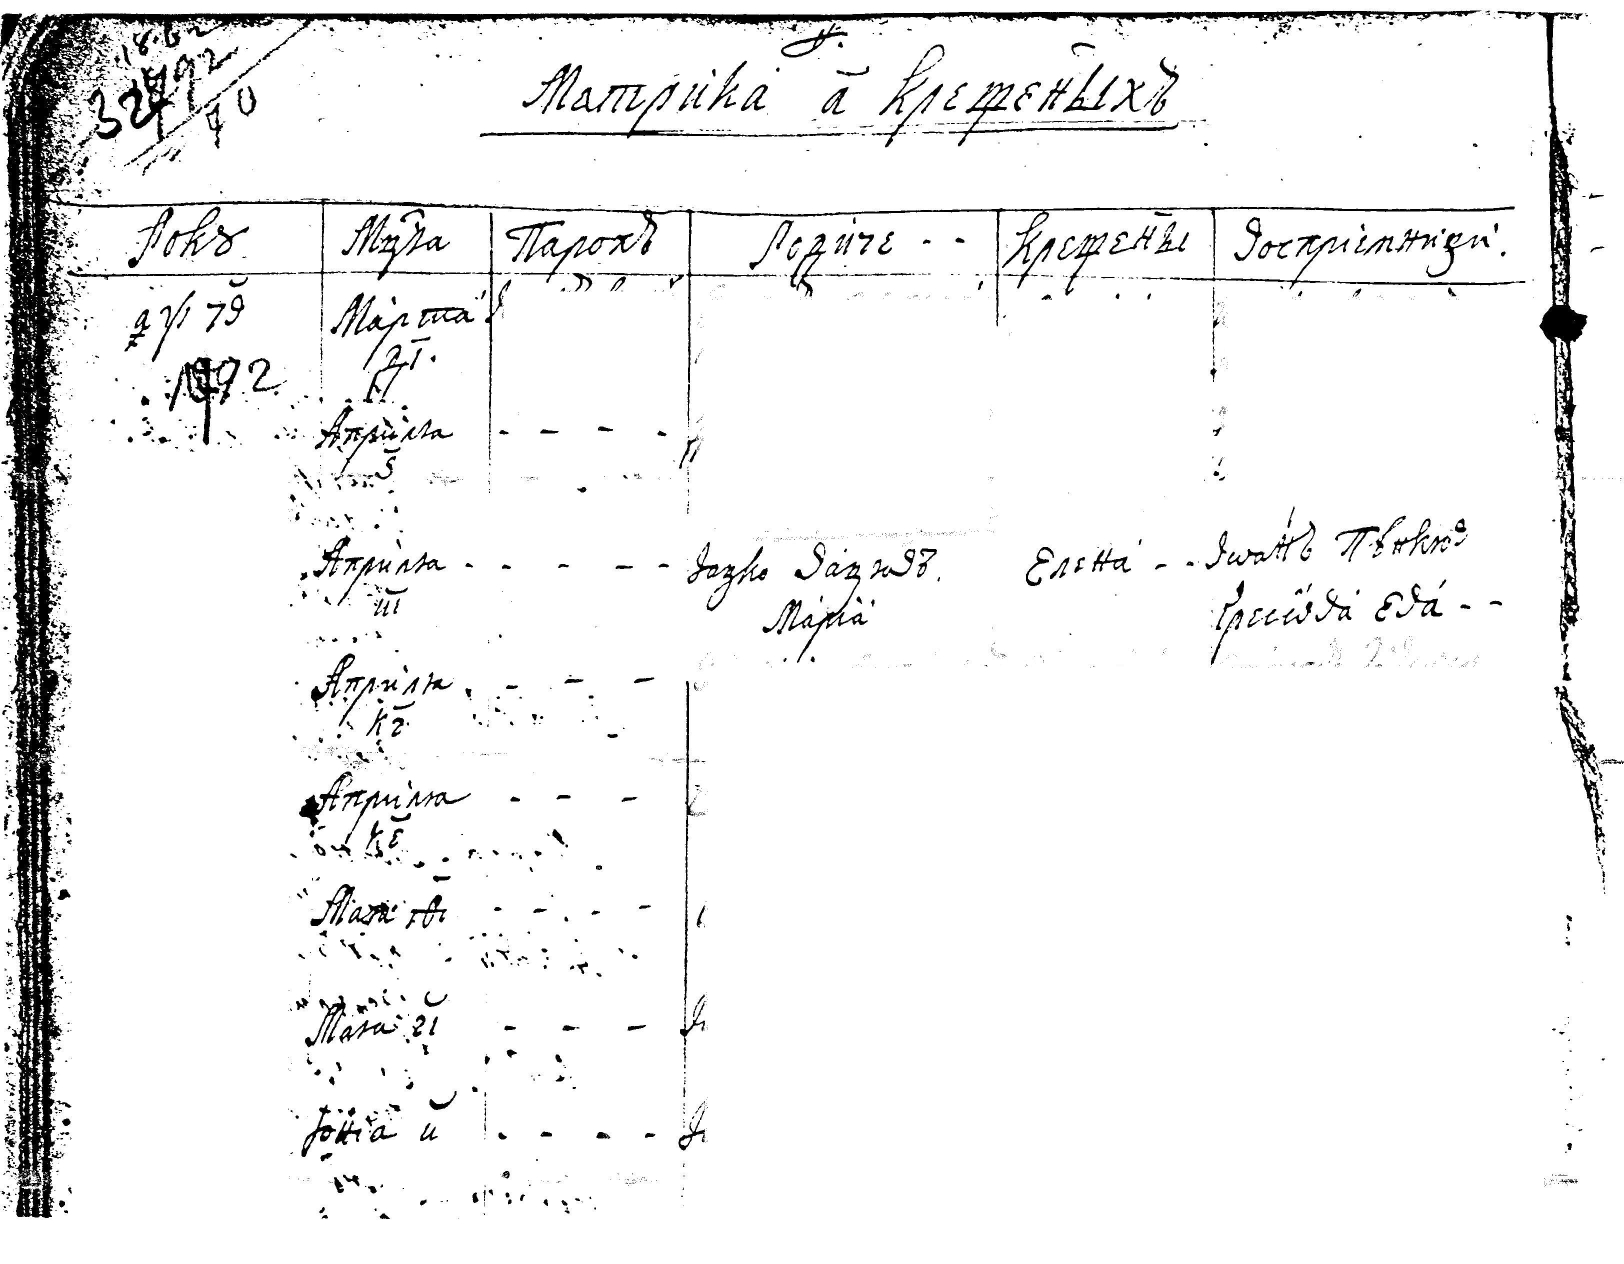 parochial birth record from 1792